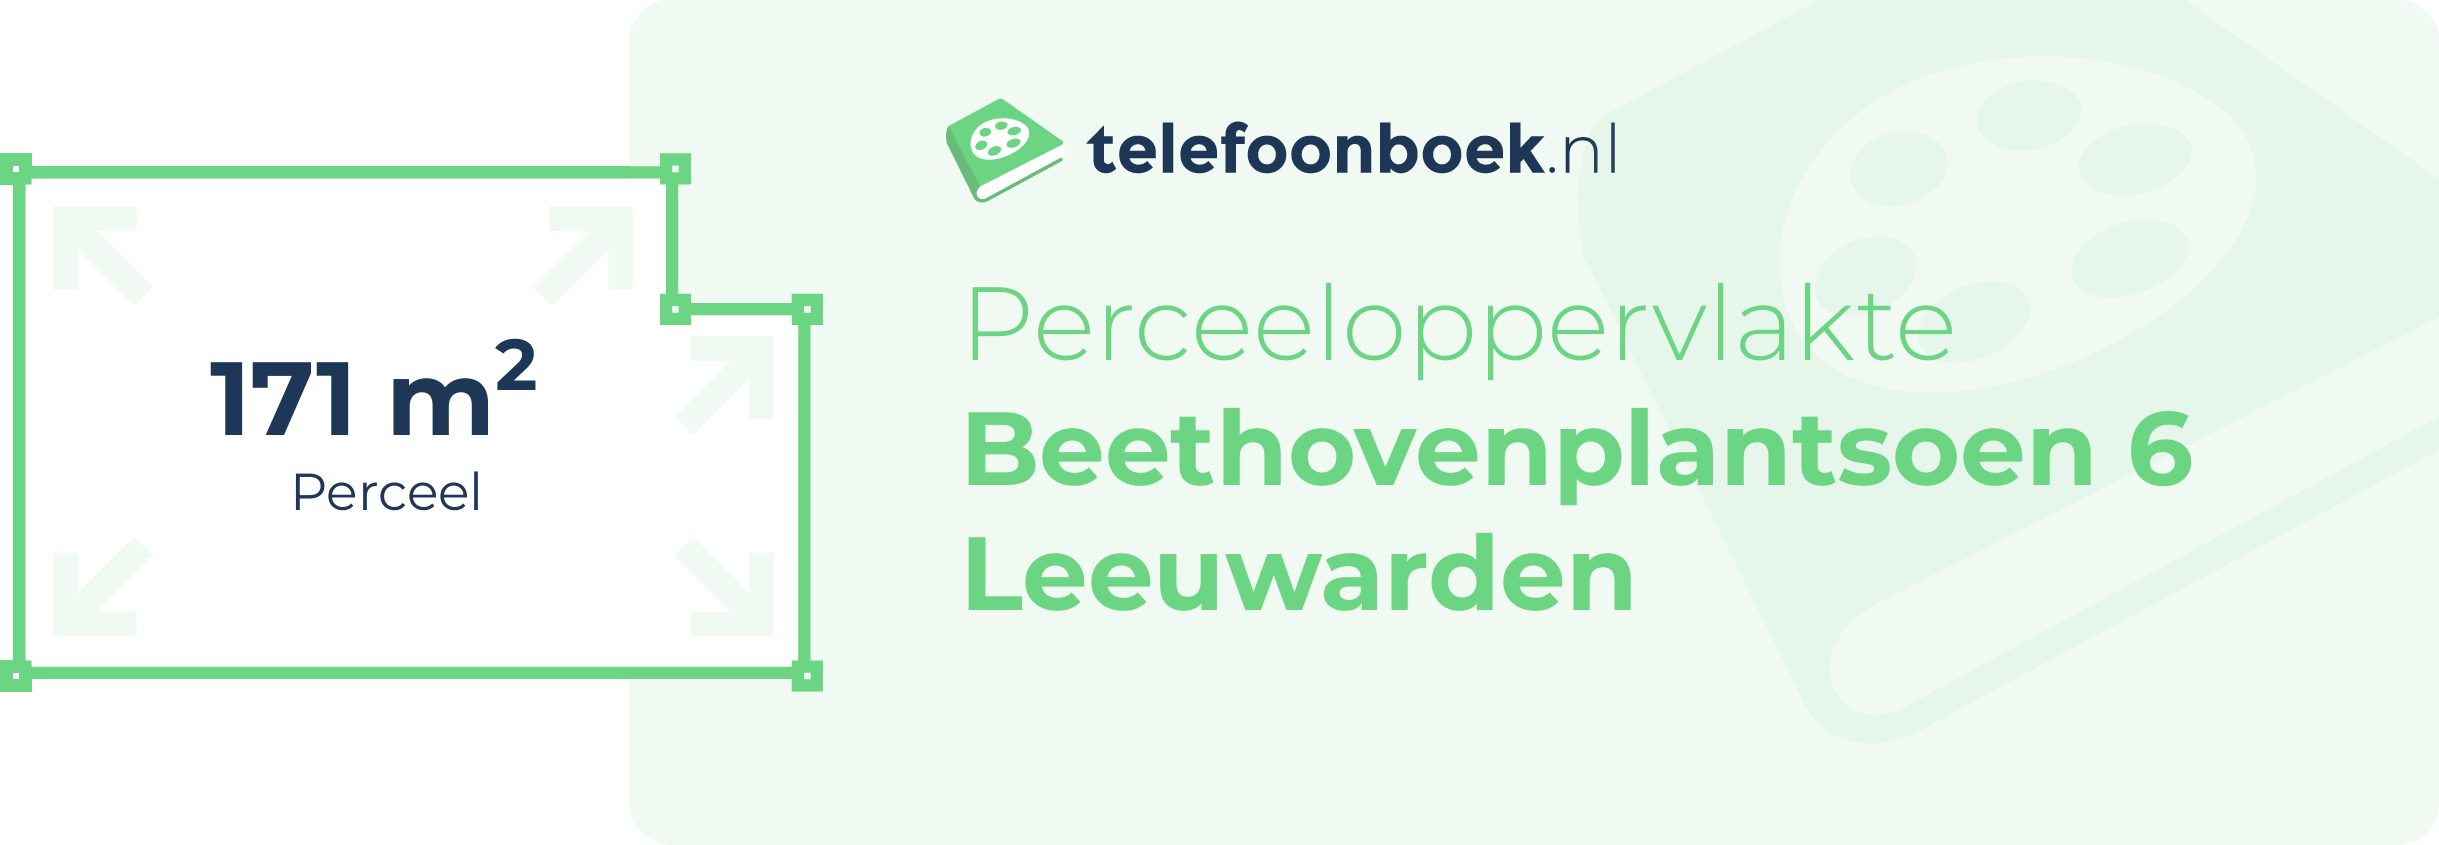 Perceeloppervlakte Beethovenplantsoen 6 Leeuwarden